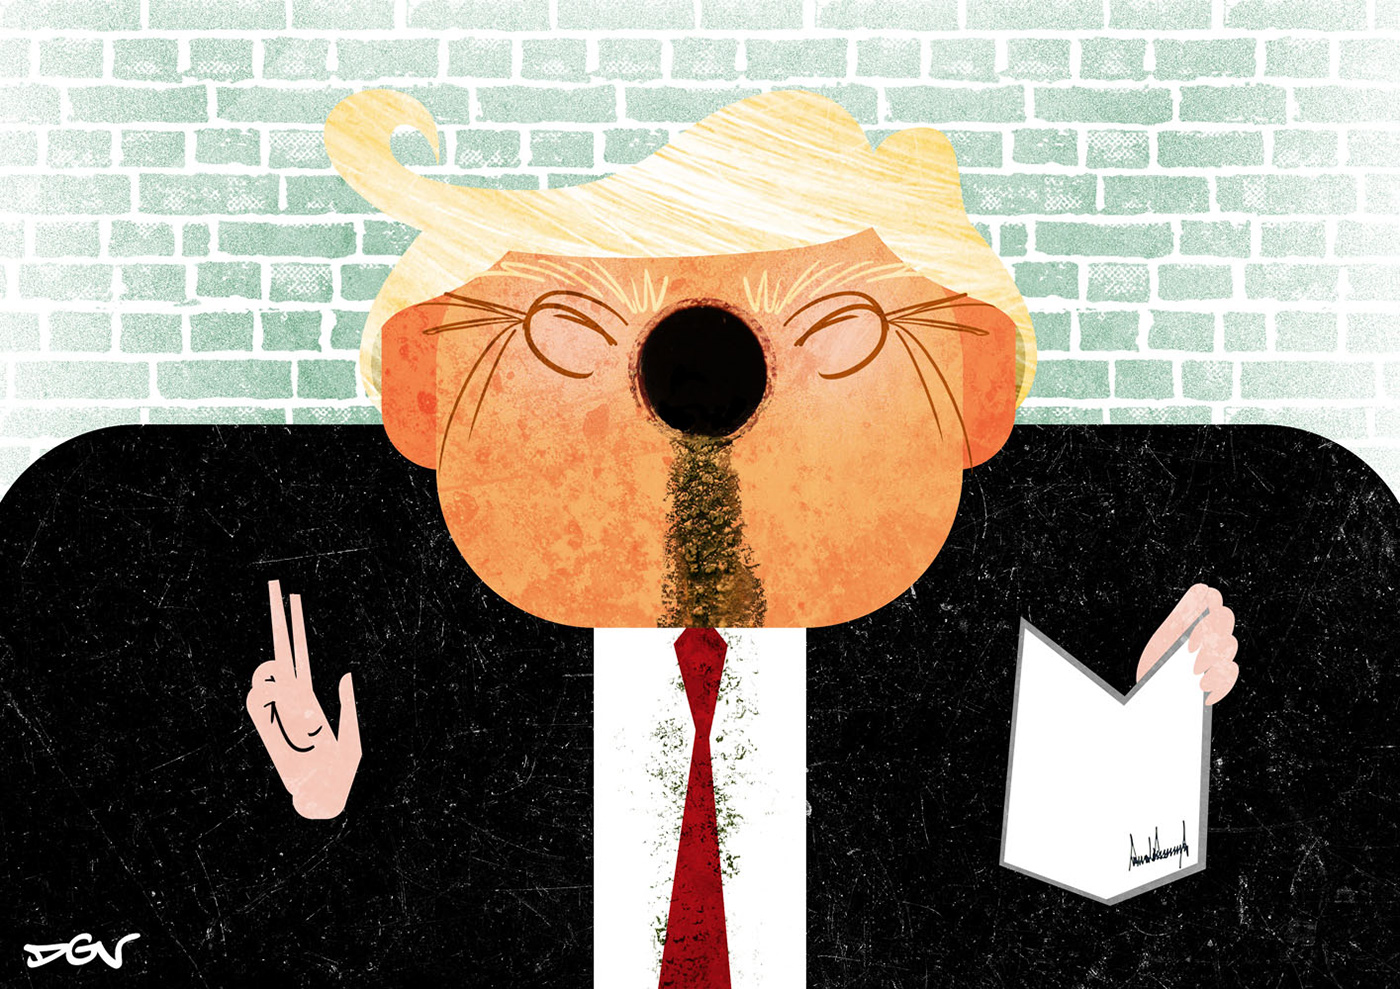 caricature   cartoon politic satire Trump humor